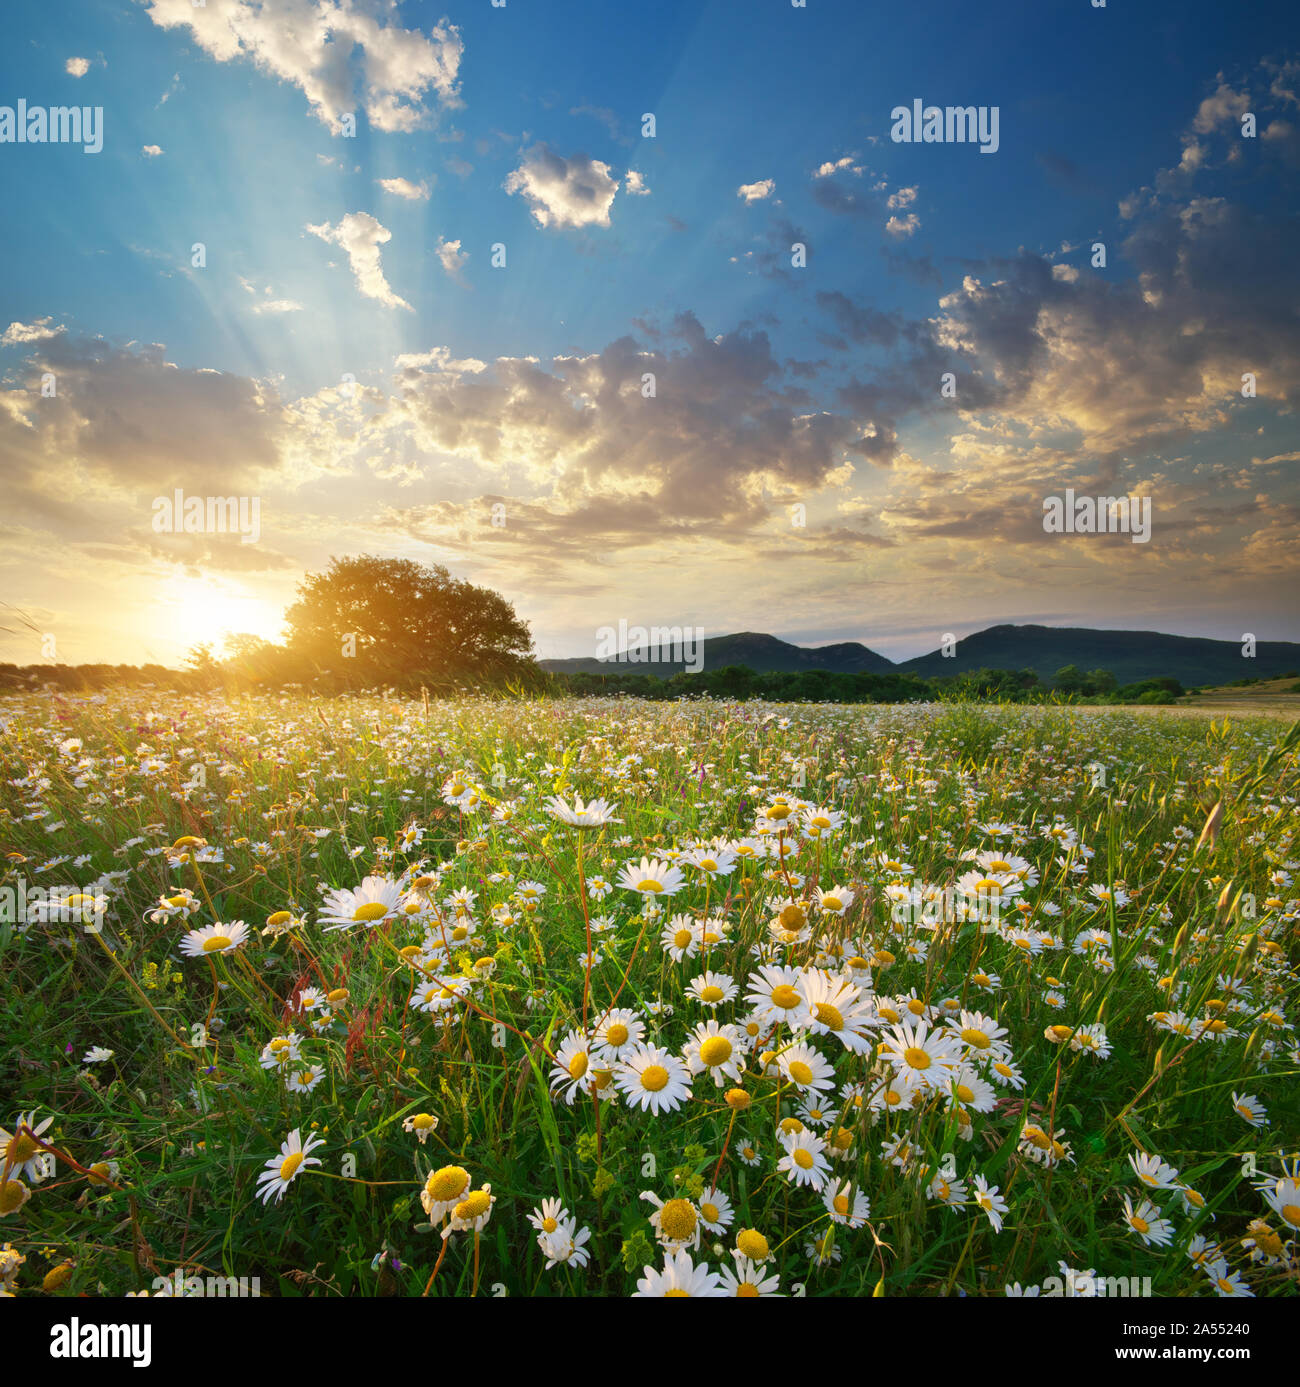 Paisajes hermosos fotografías e imágenes de alta resolución - Alamy